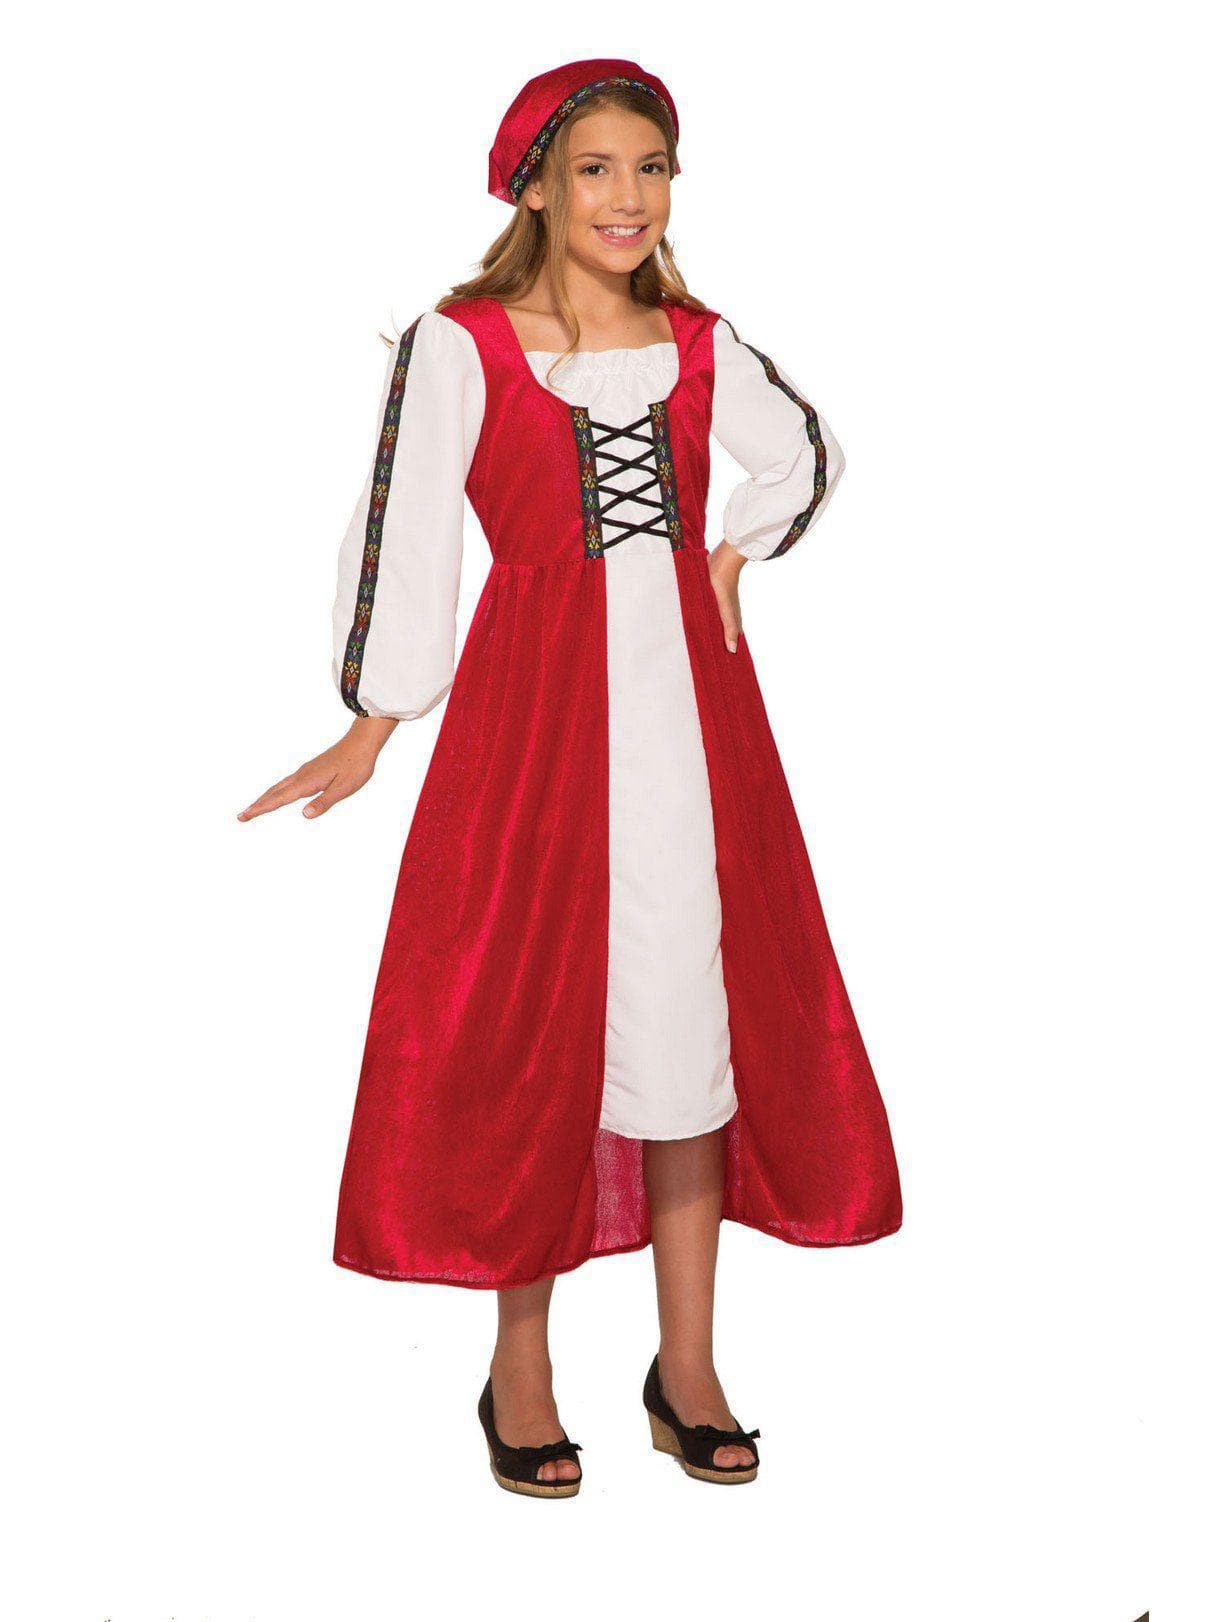 Kid's Renaissance Faire Girl Costume - costumes.com